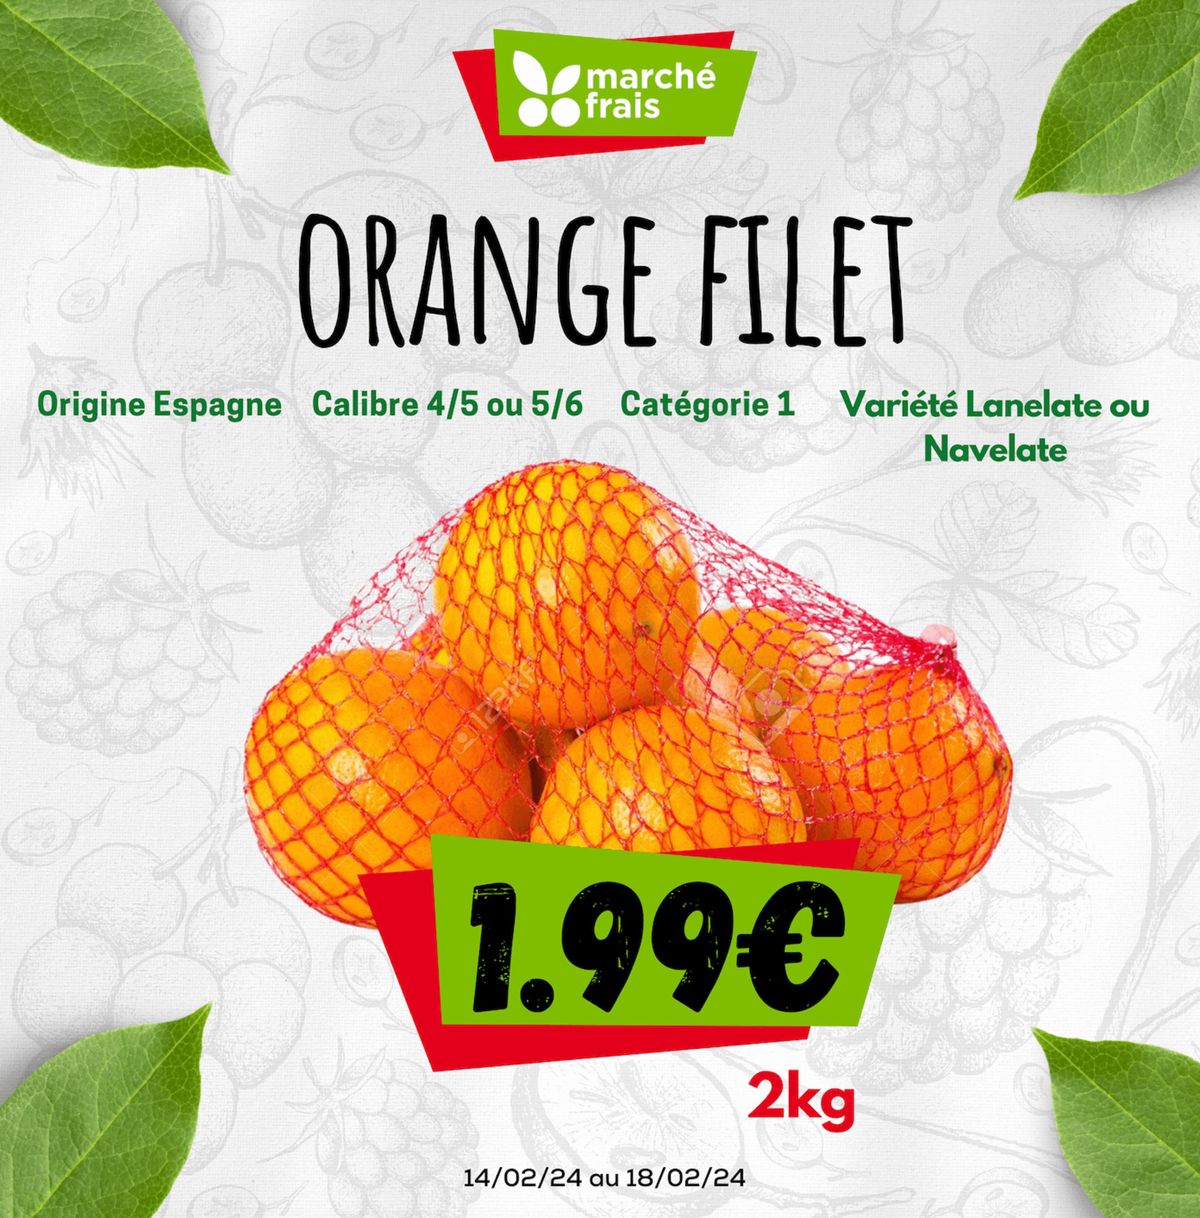 Catalogue Orange filet, page 00001